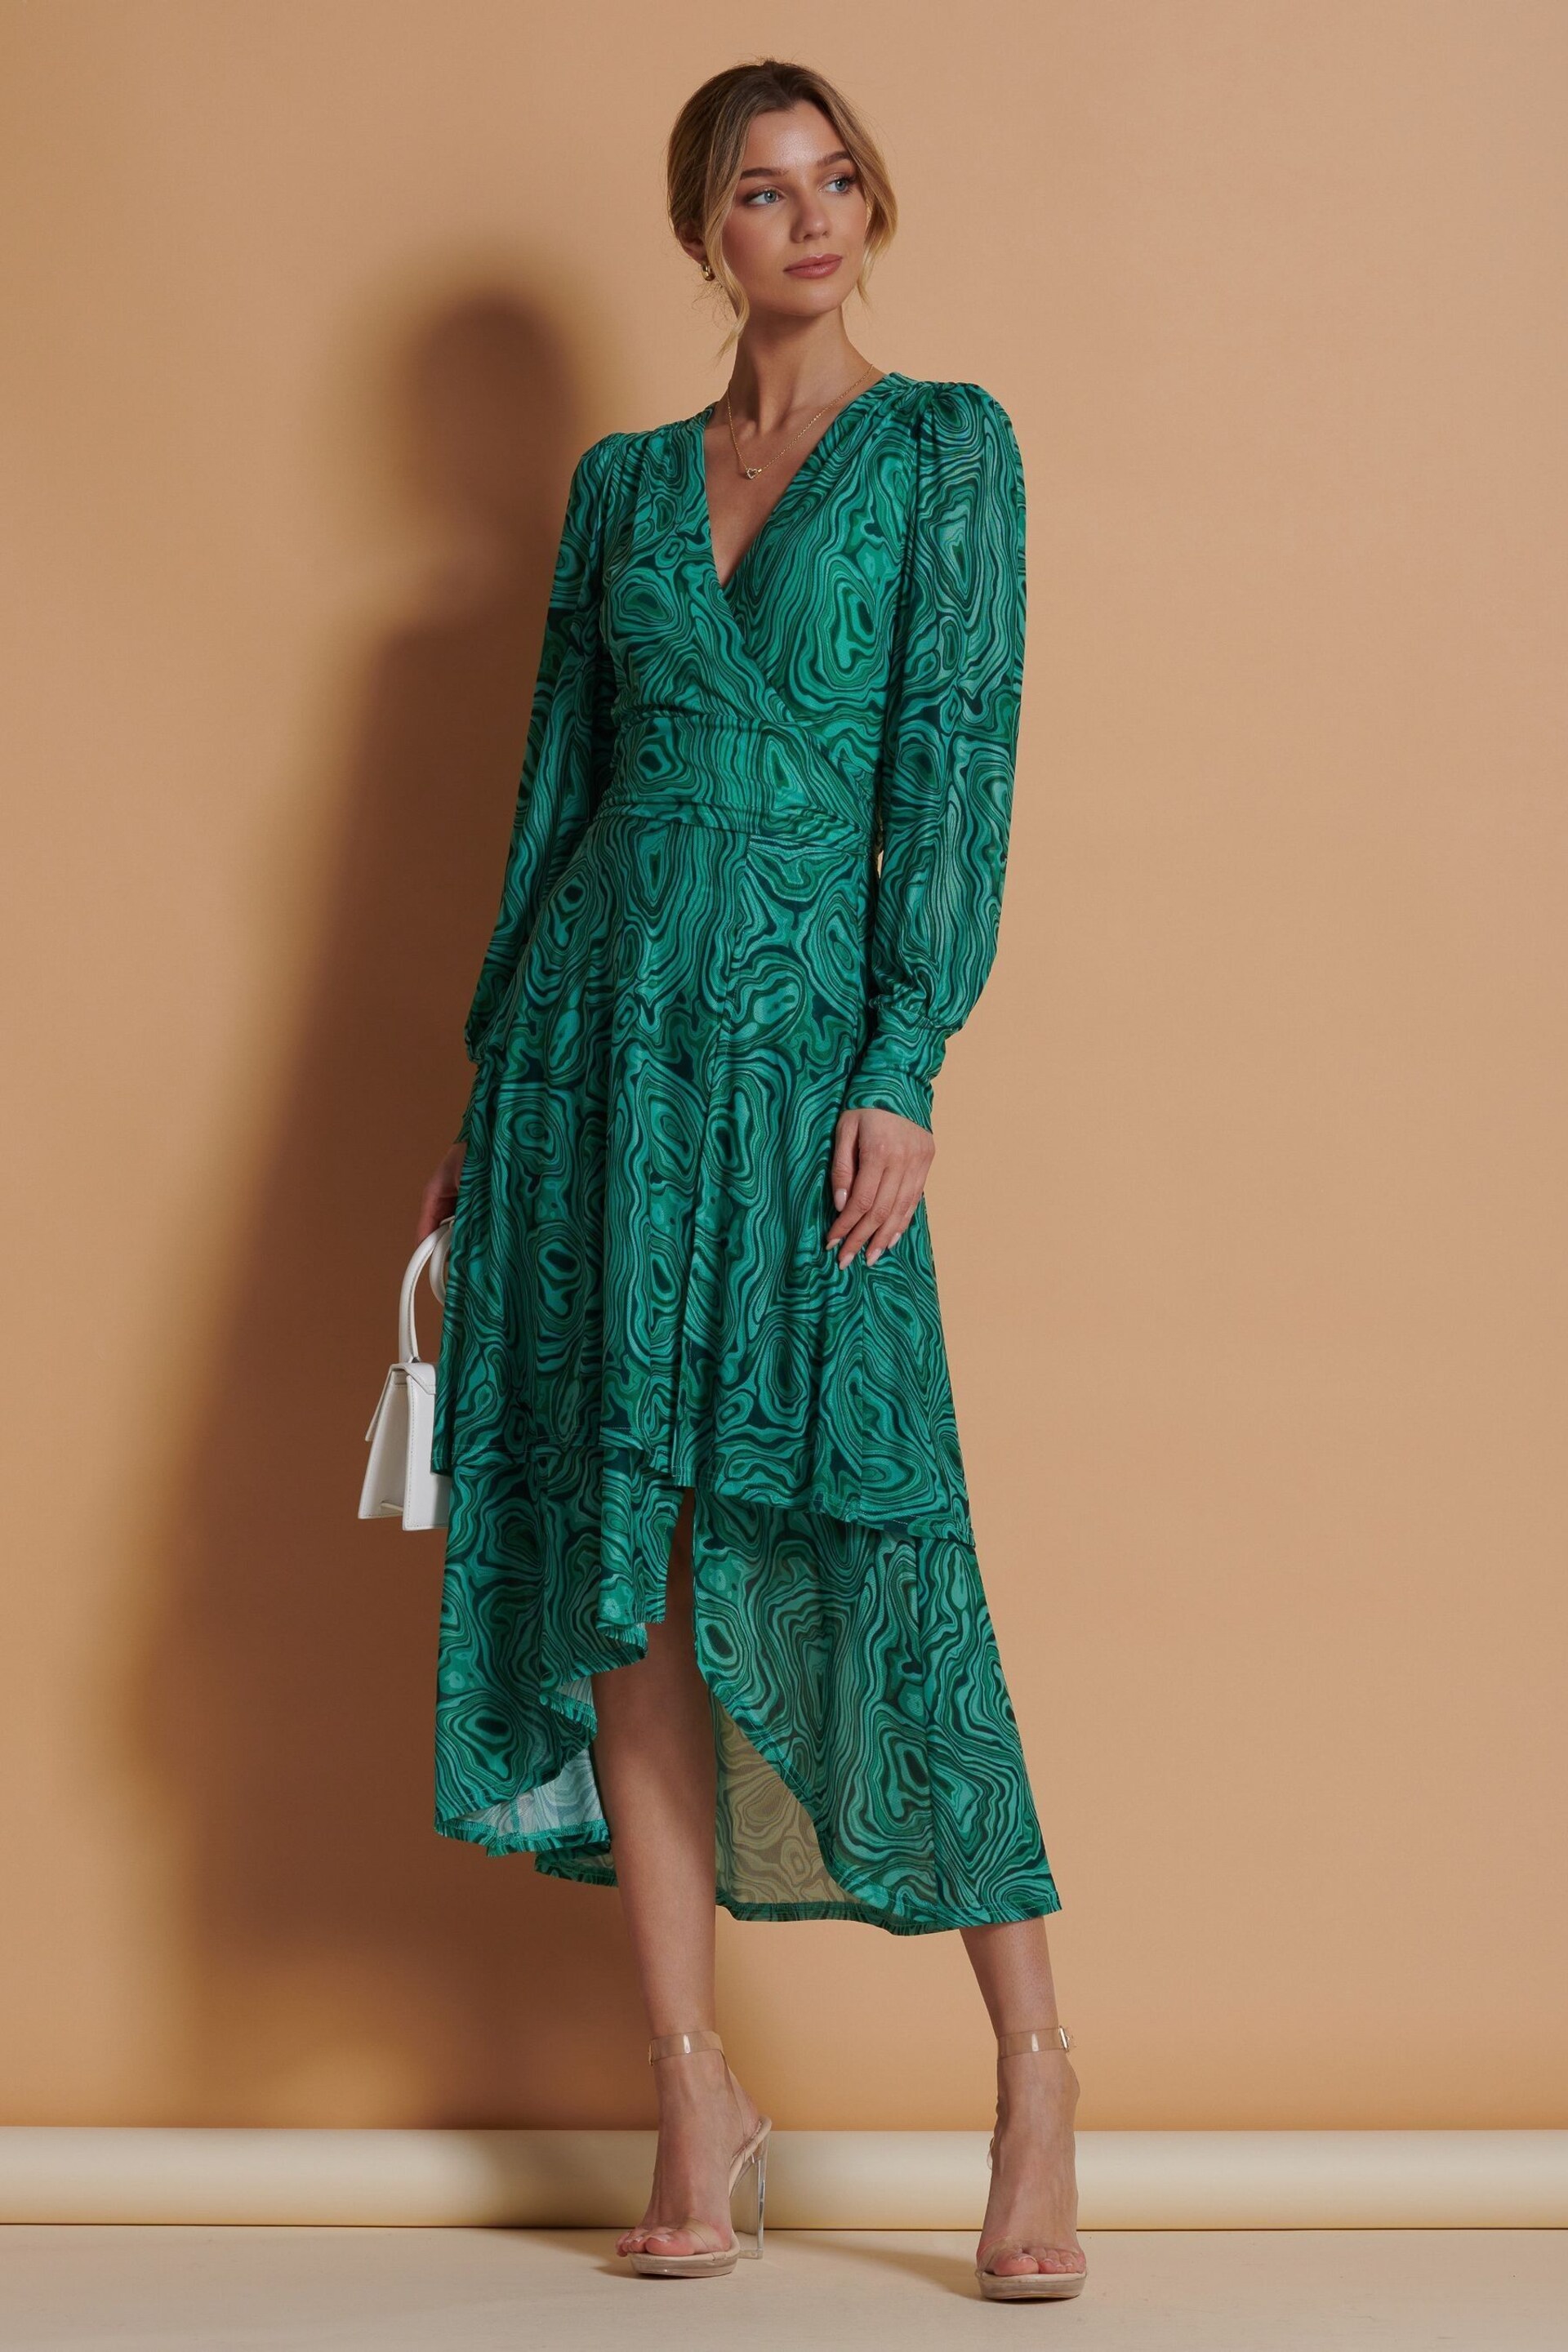 Jolie Moi Green Abstract Mesh Midi Dress - Image 4 of 6